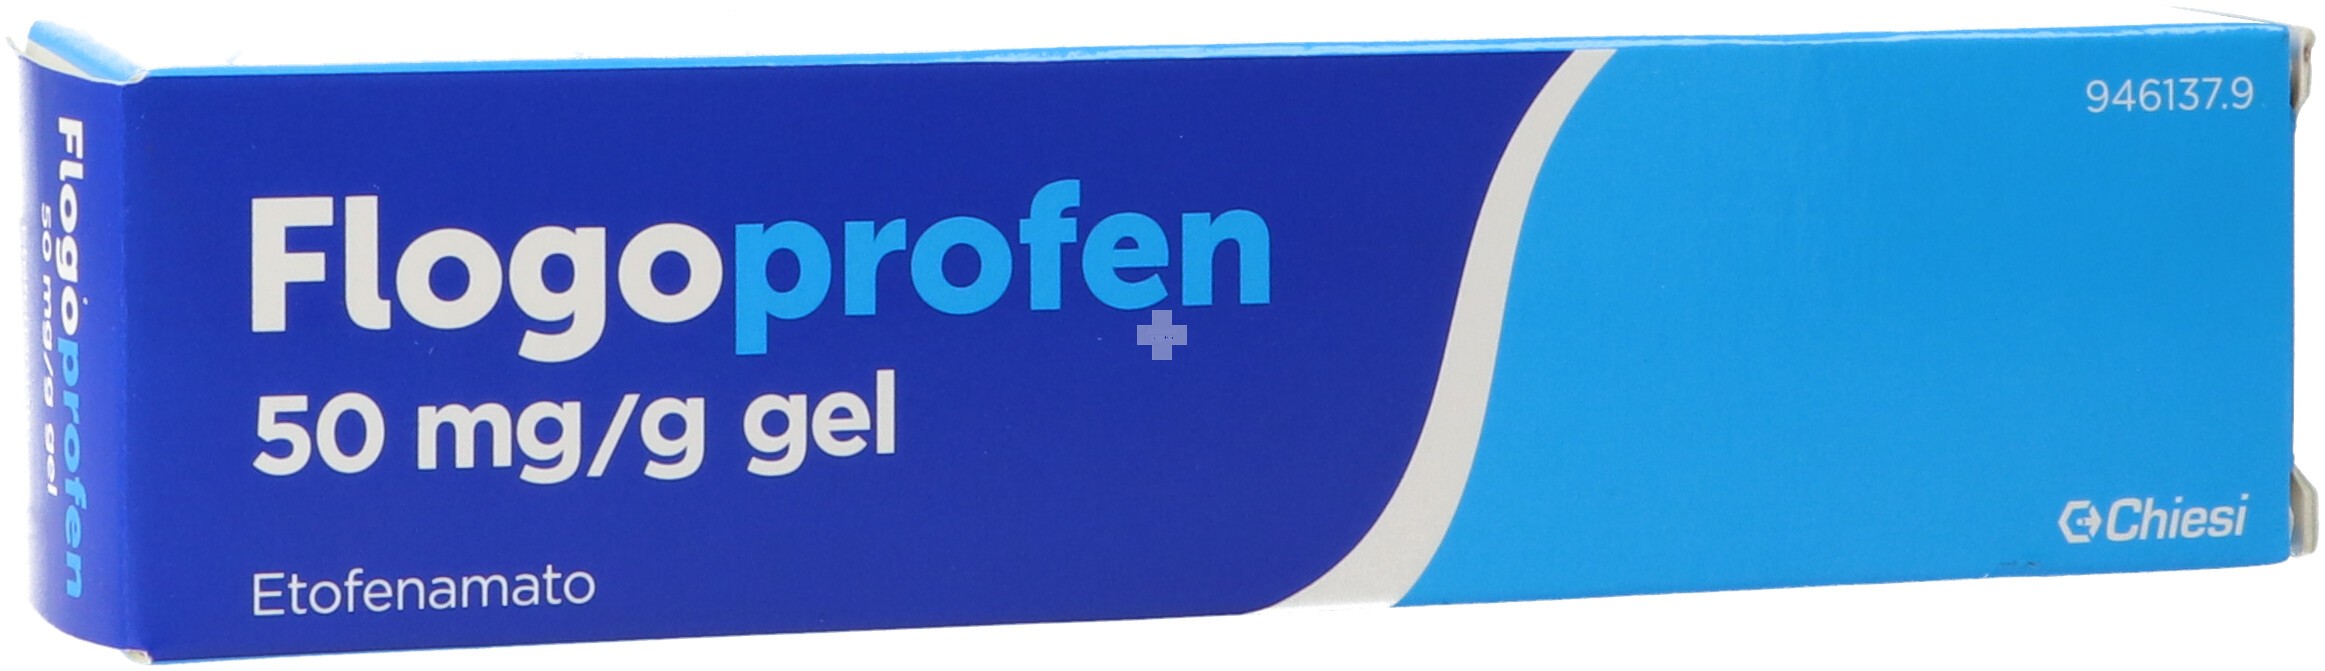 Flogoprofen 50 mg/G gel - 1 Tubo De 60 g